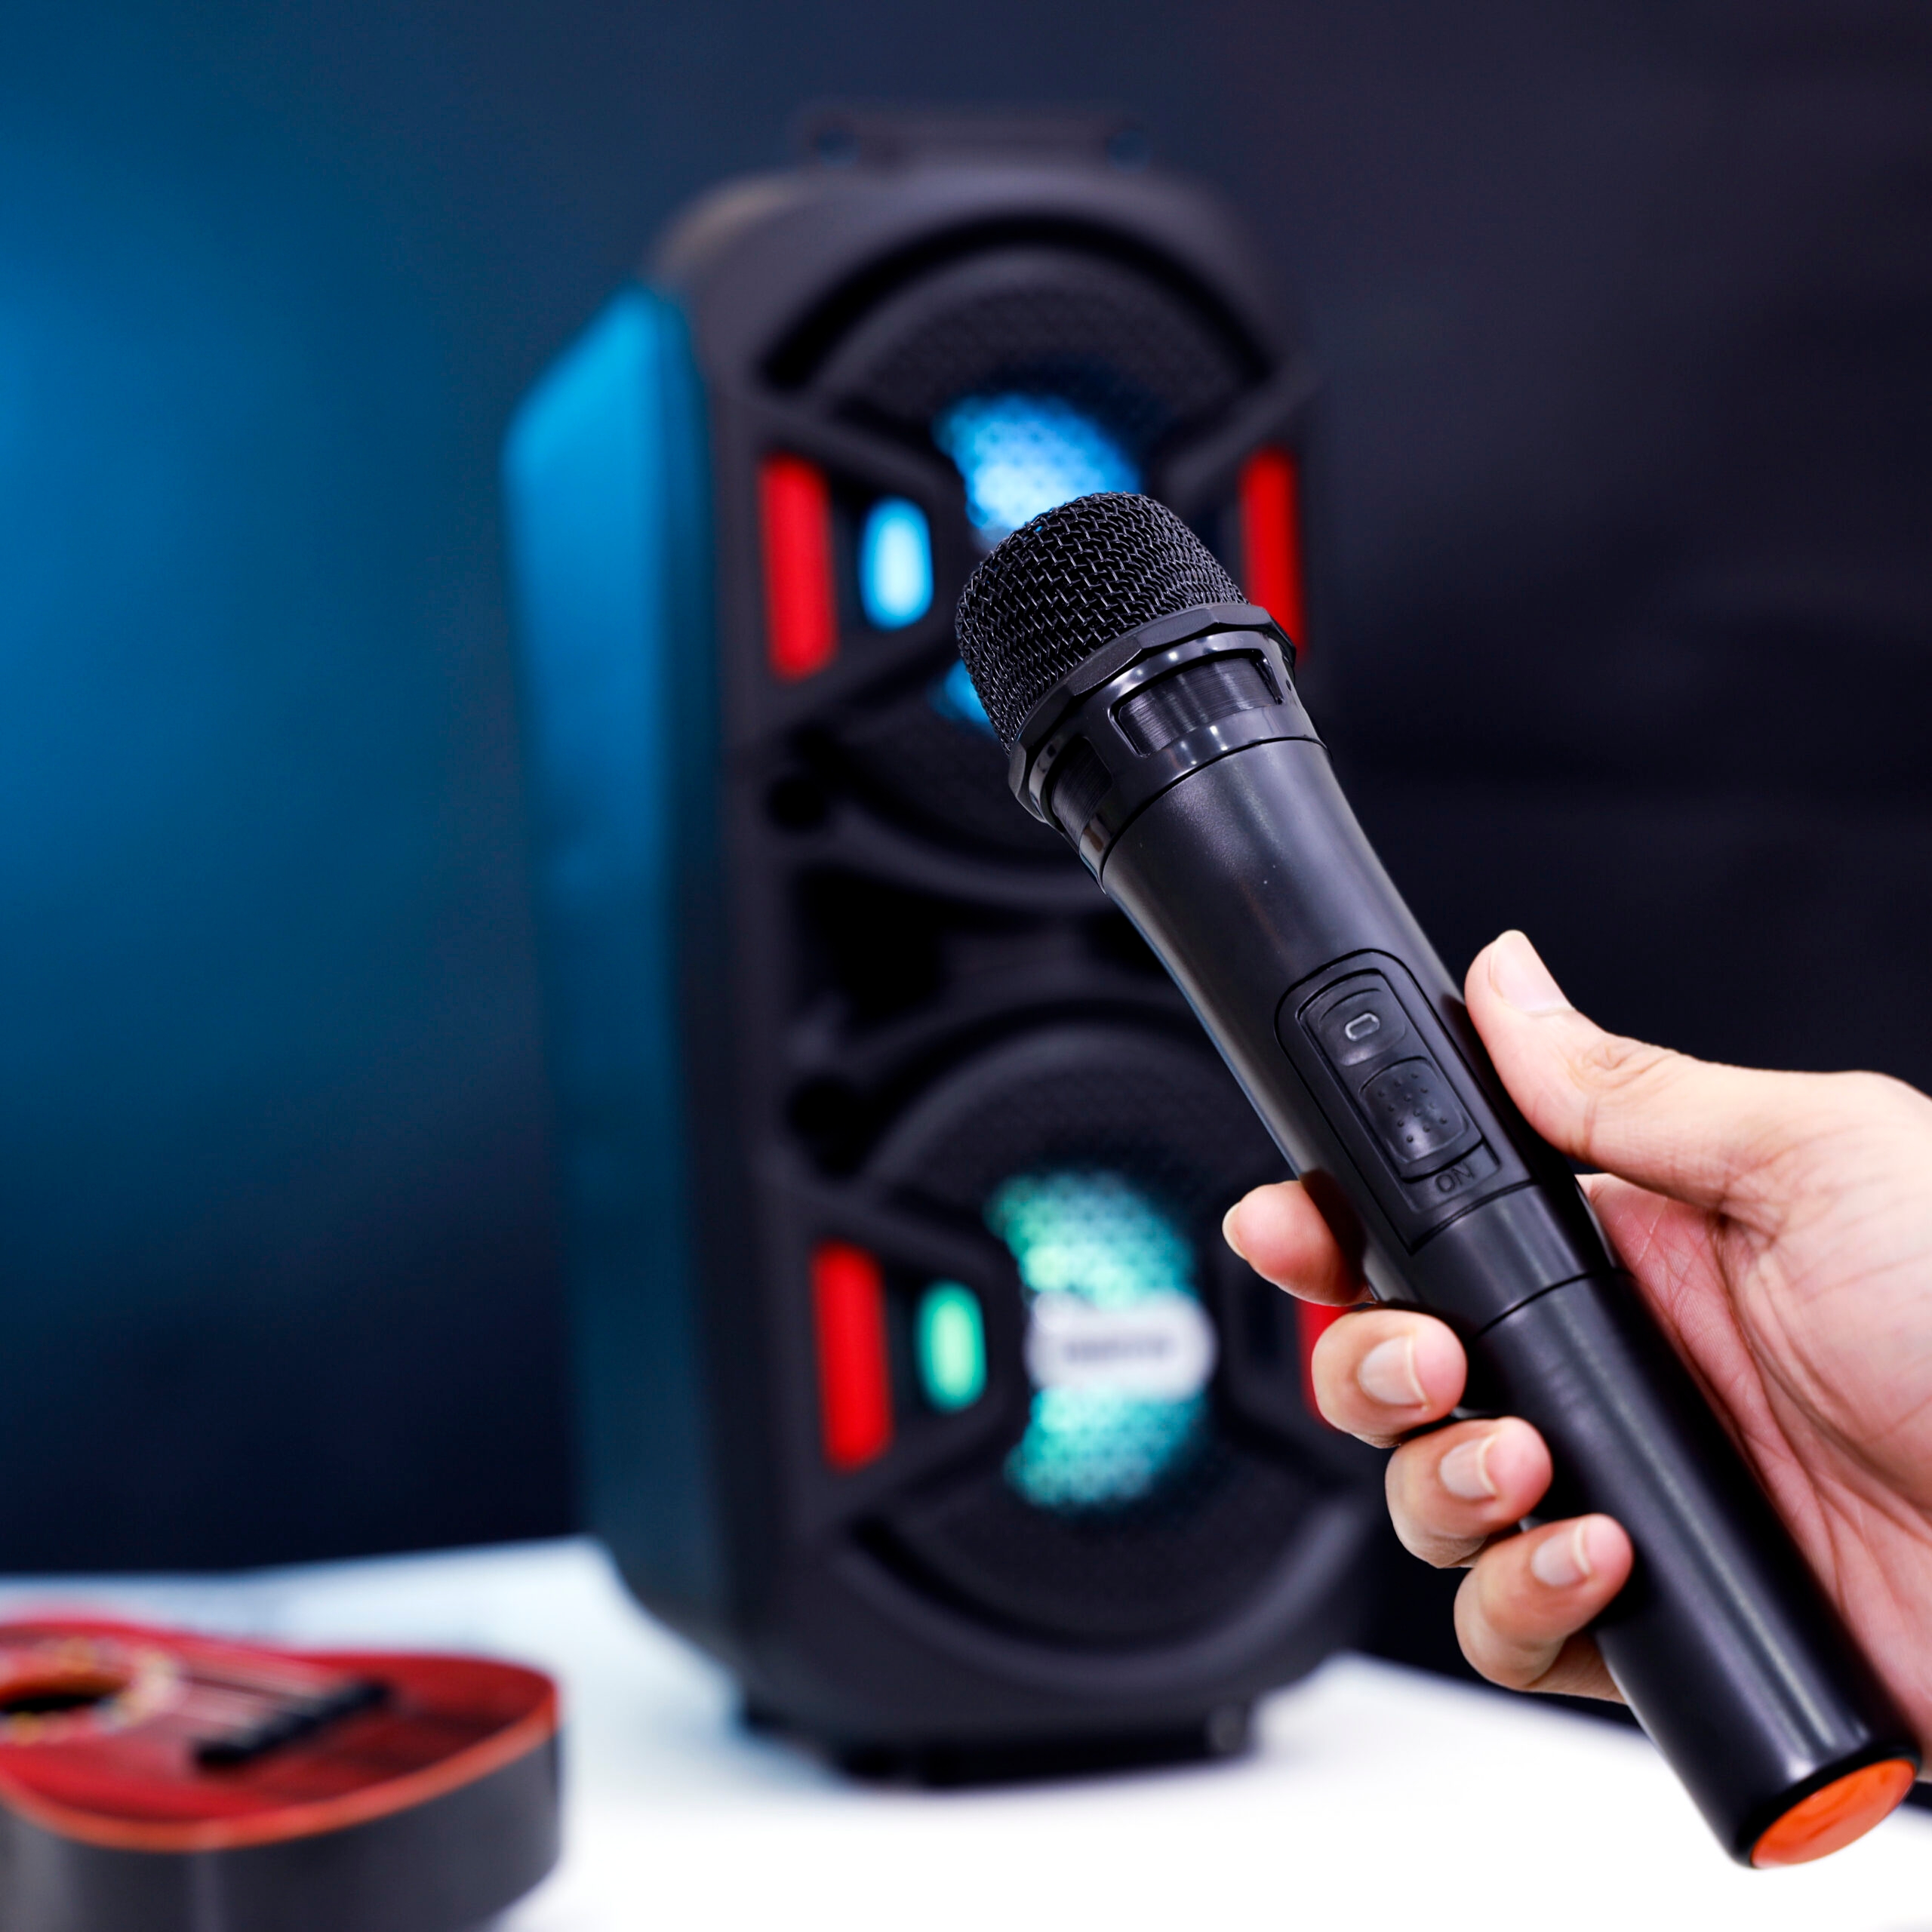 مكبر صوت للحفلات محمول بالبطارية مع مايكروفون Geepas Rechargeable Portable Speaker